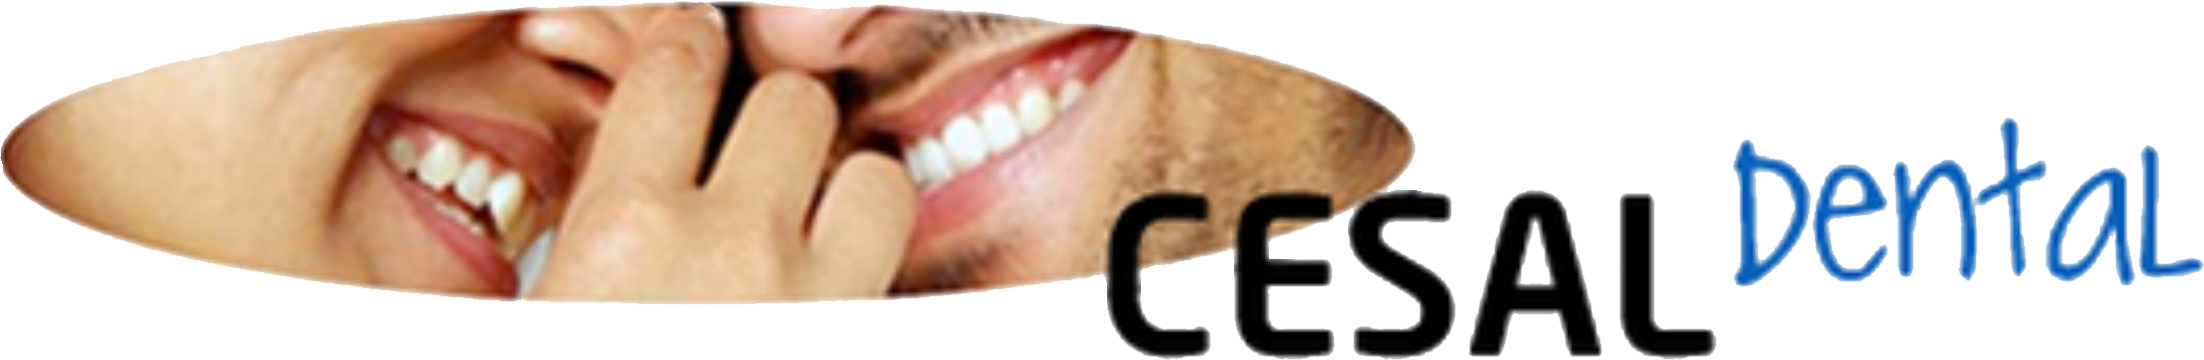 Cesal Dental Distribuidor Guantes Aurelia